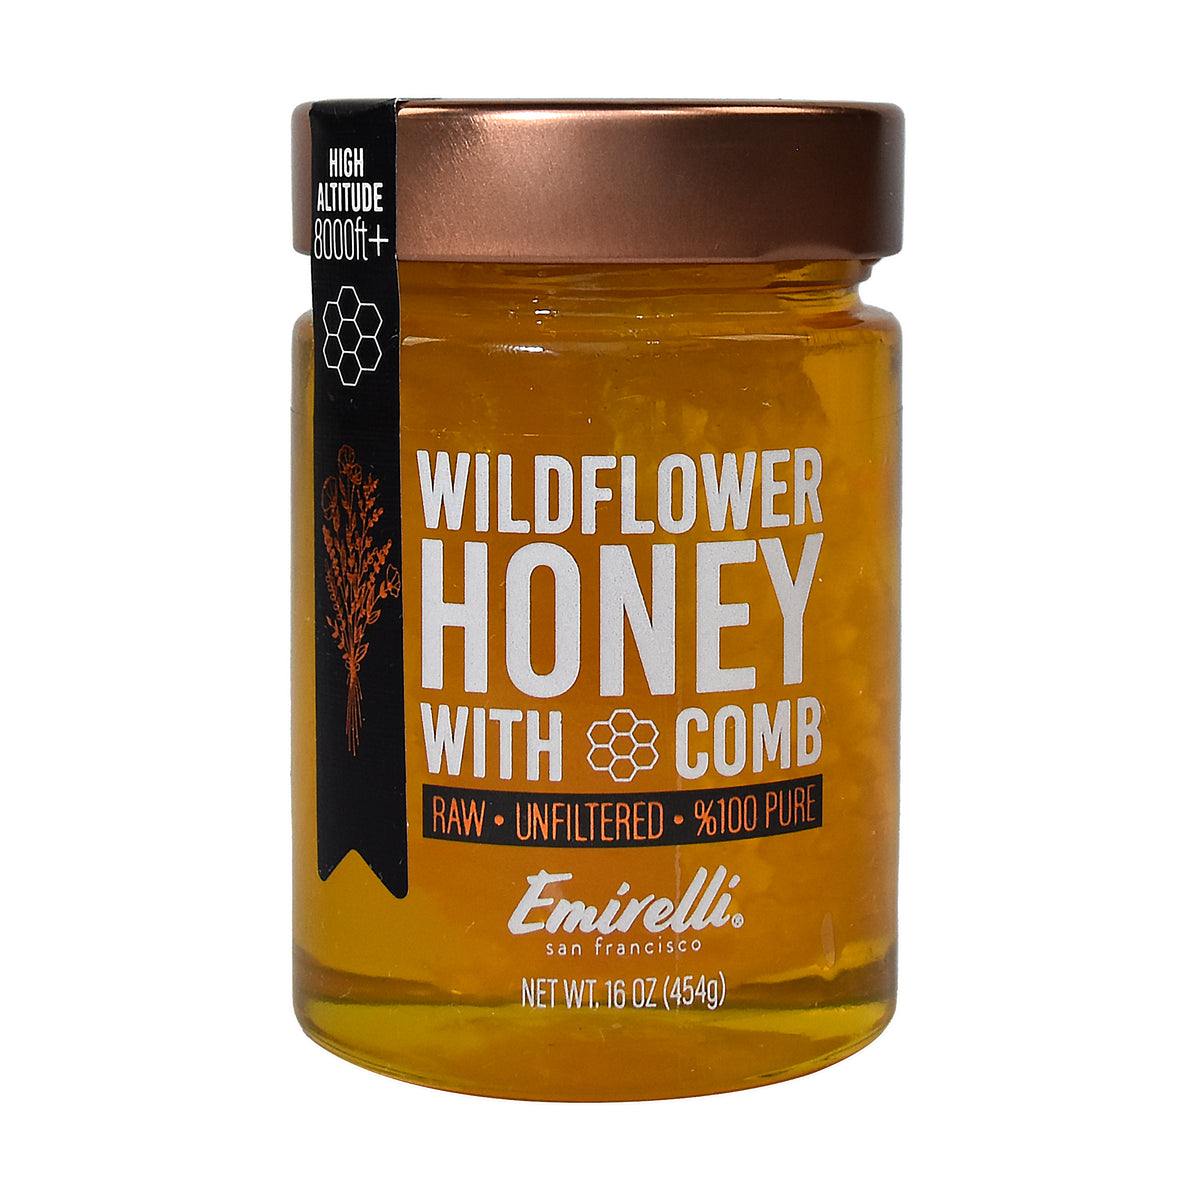 Wildflower Comb Honey, Minnesota Honey